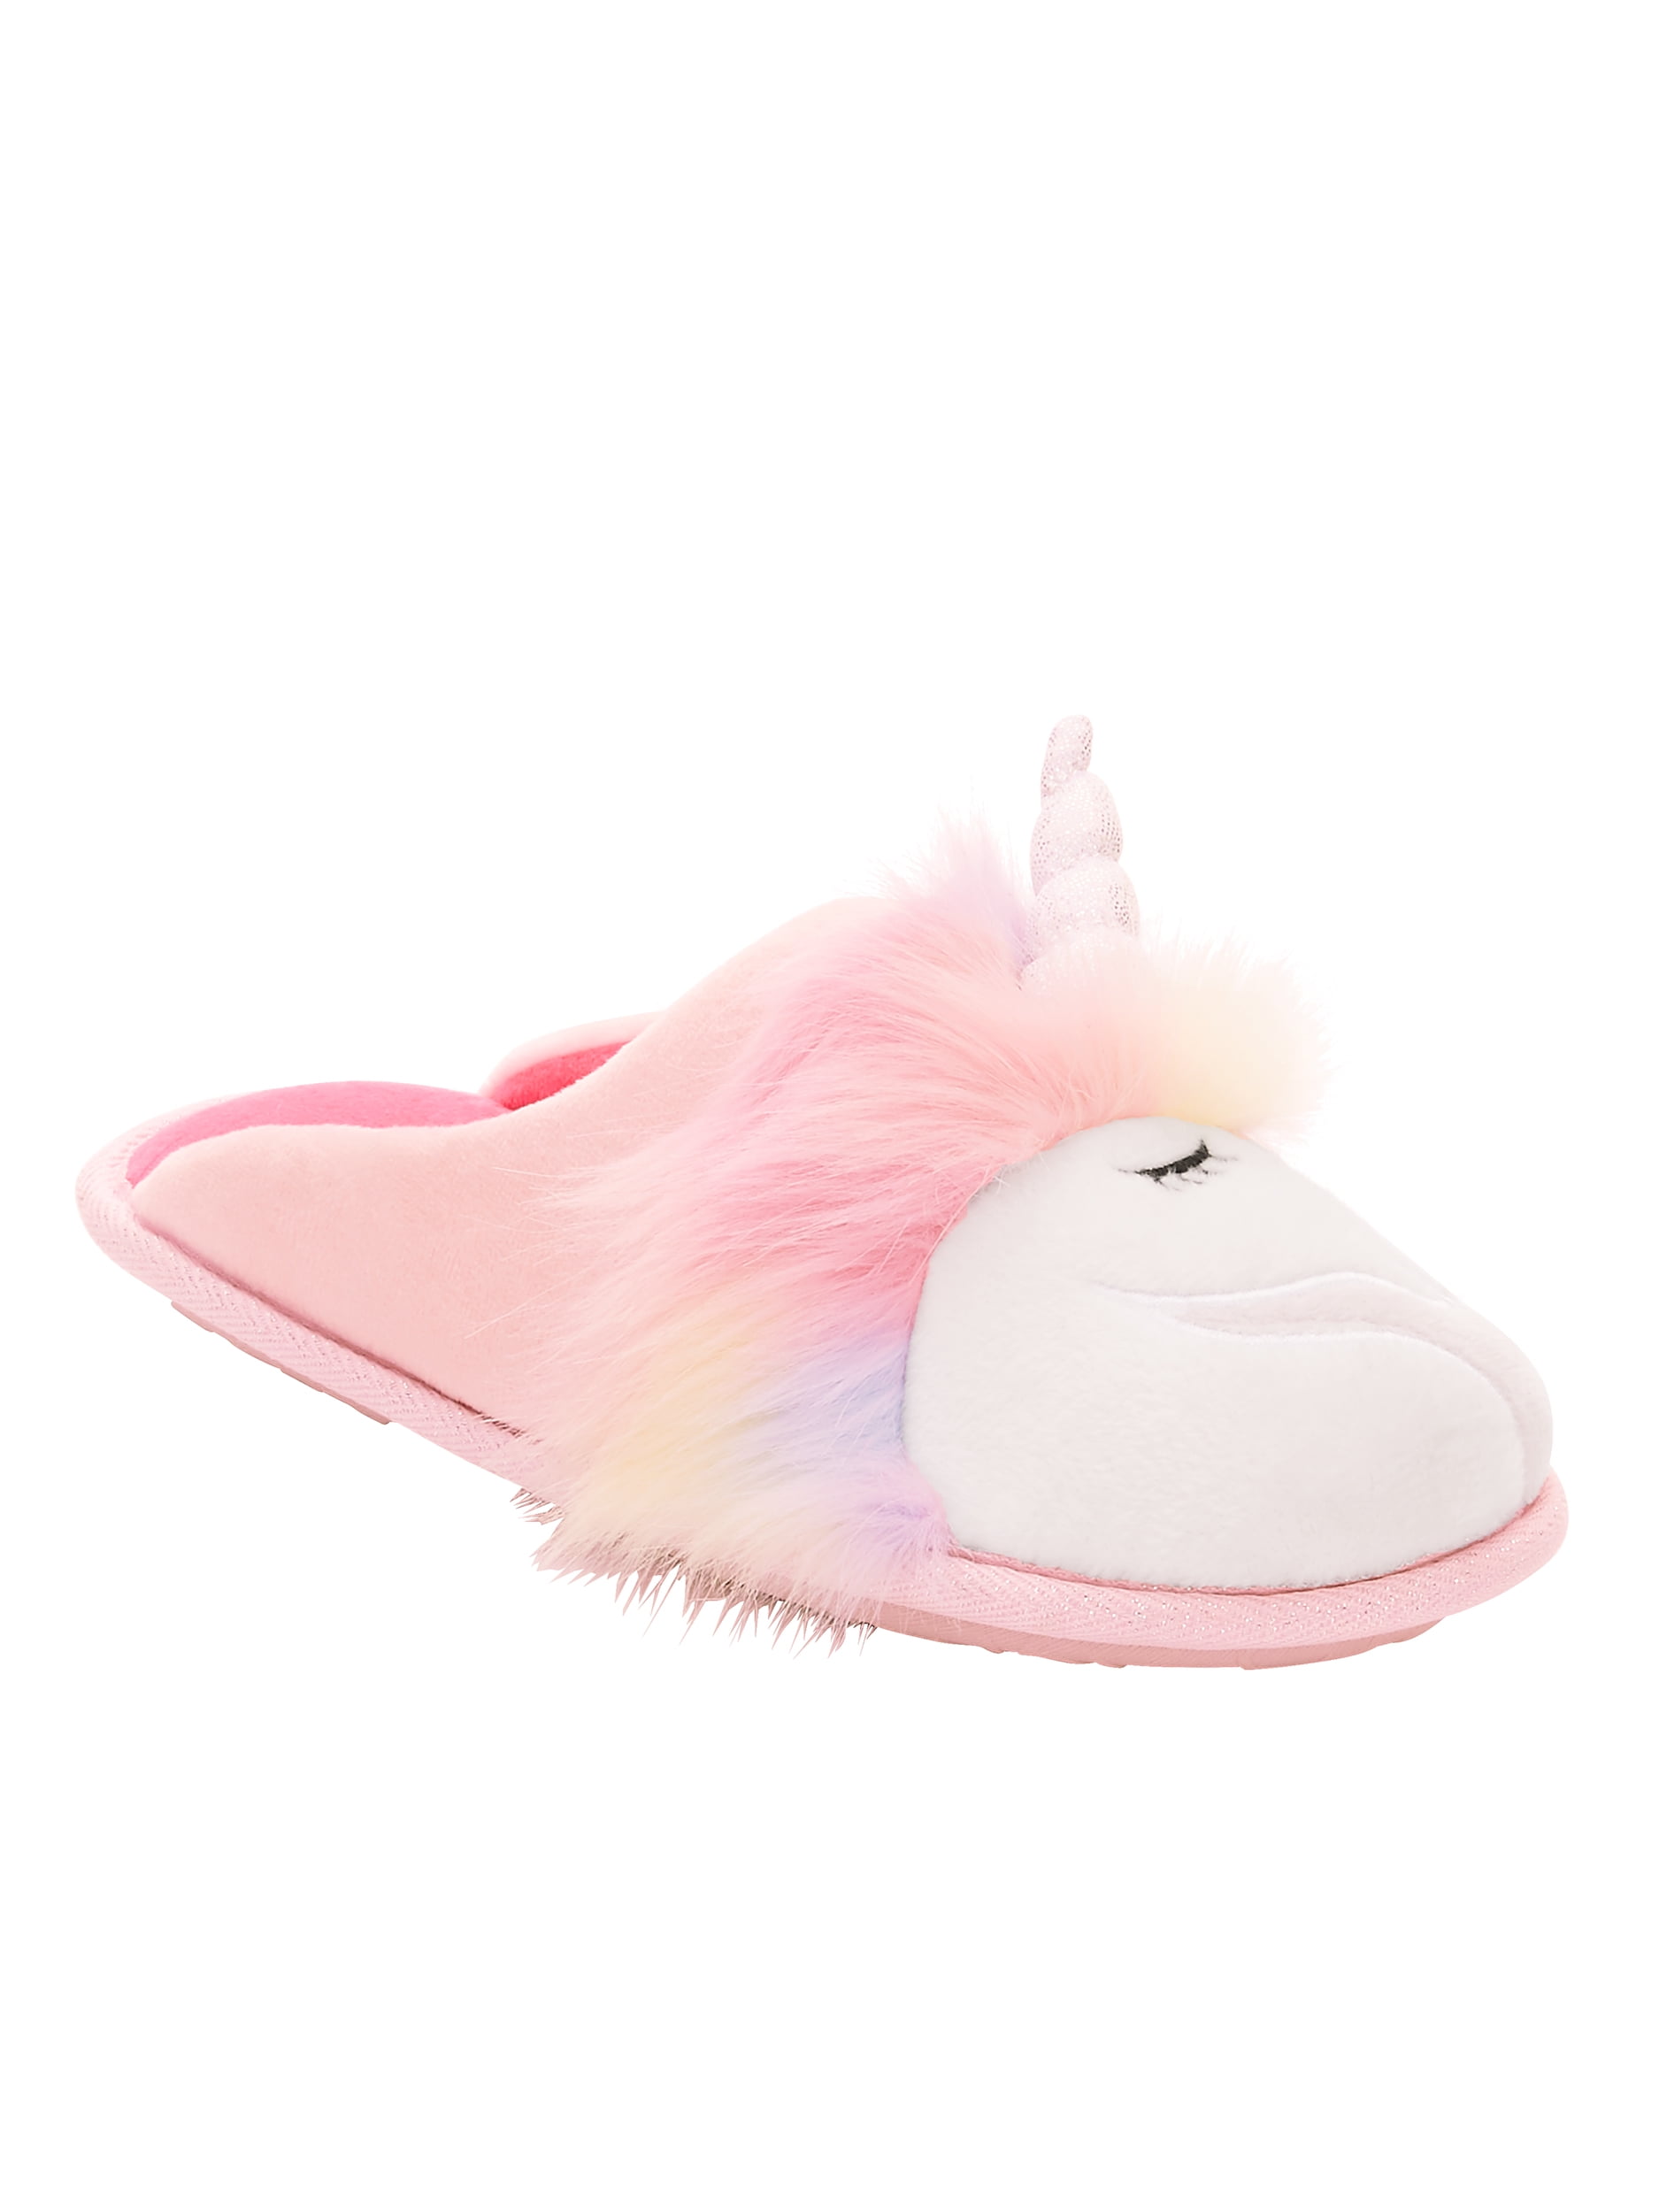 unicorn slippers walmart